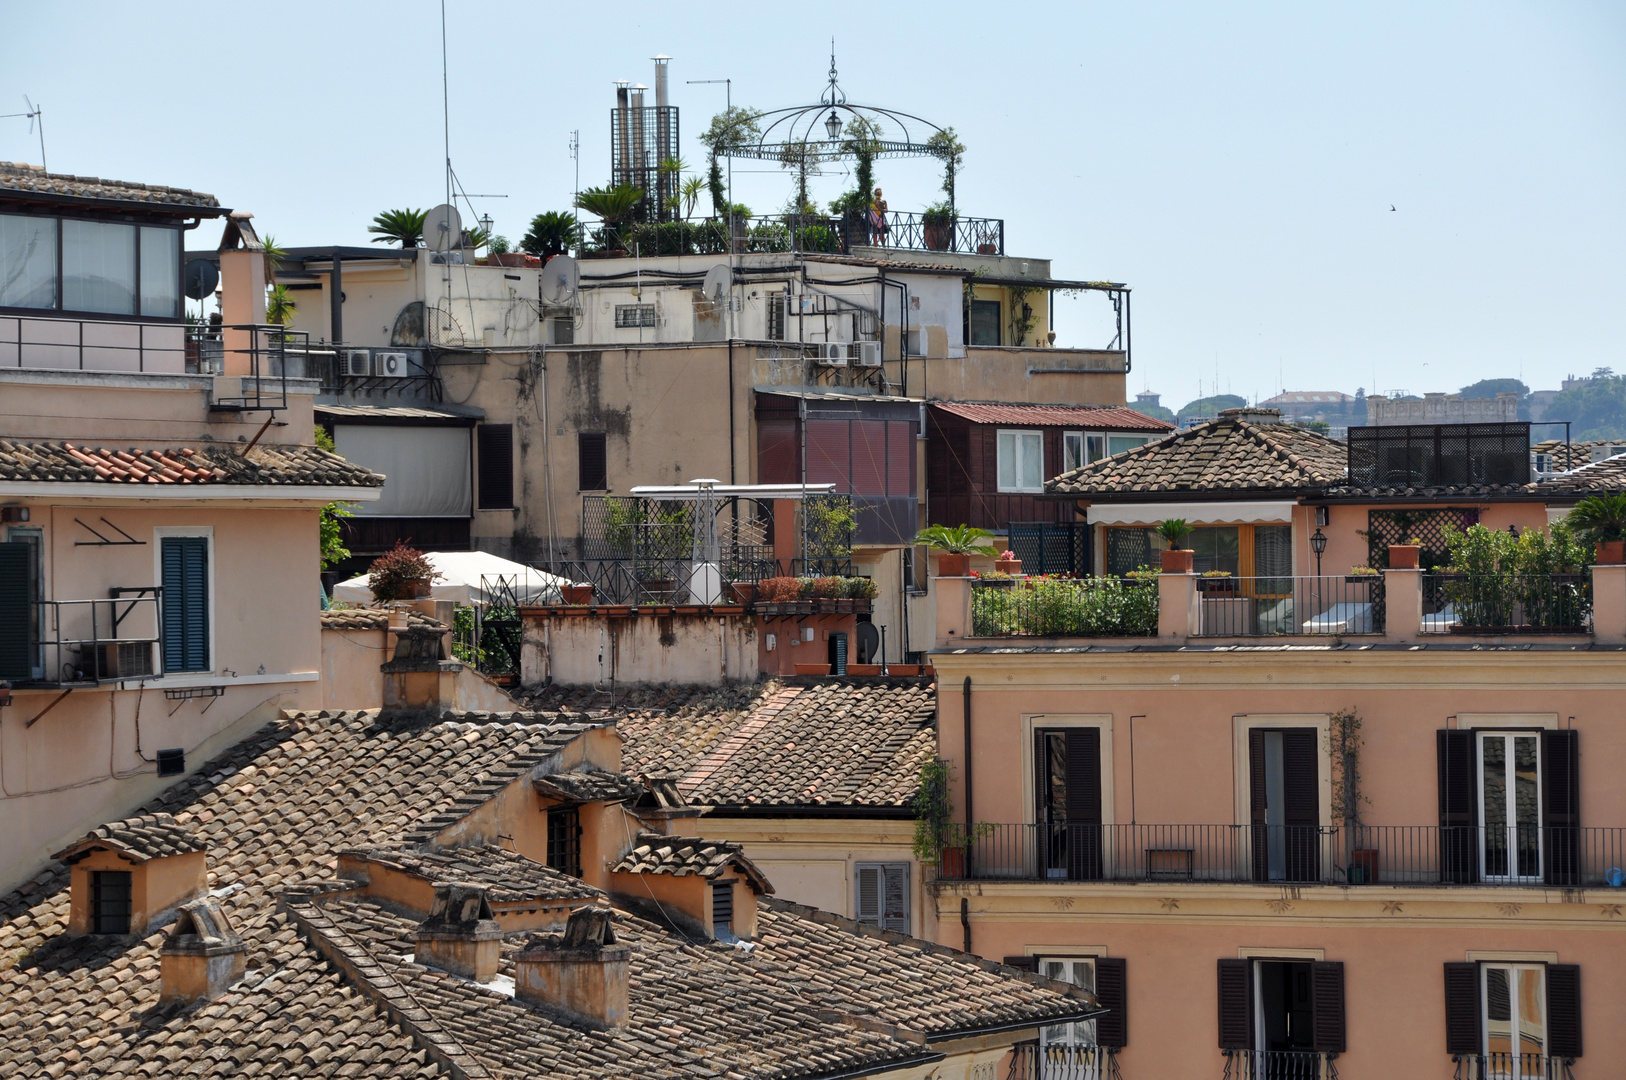 Dachgärten in Rom